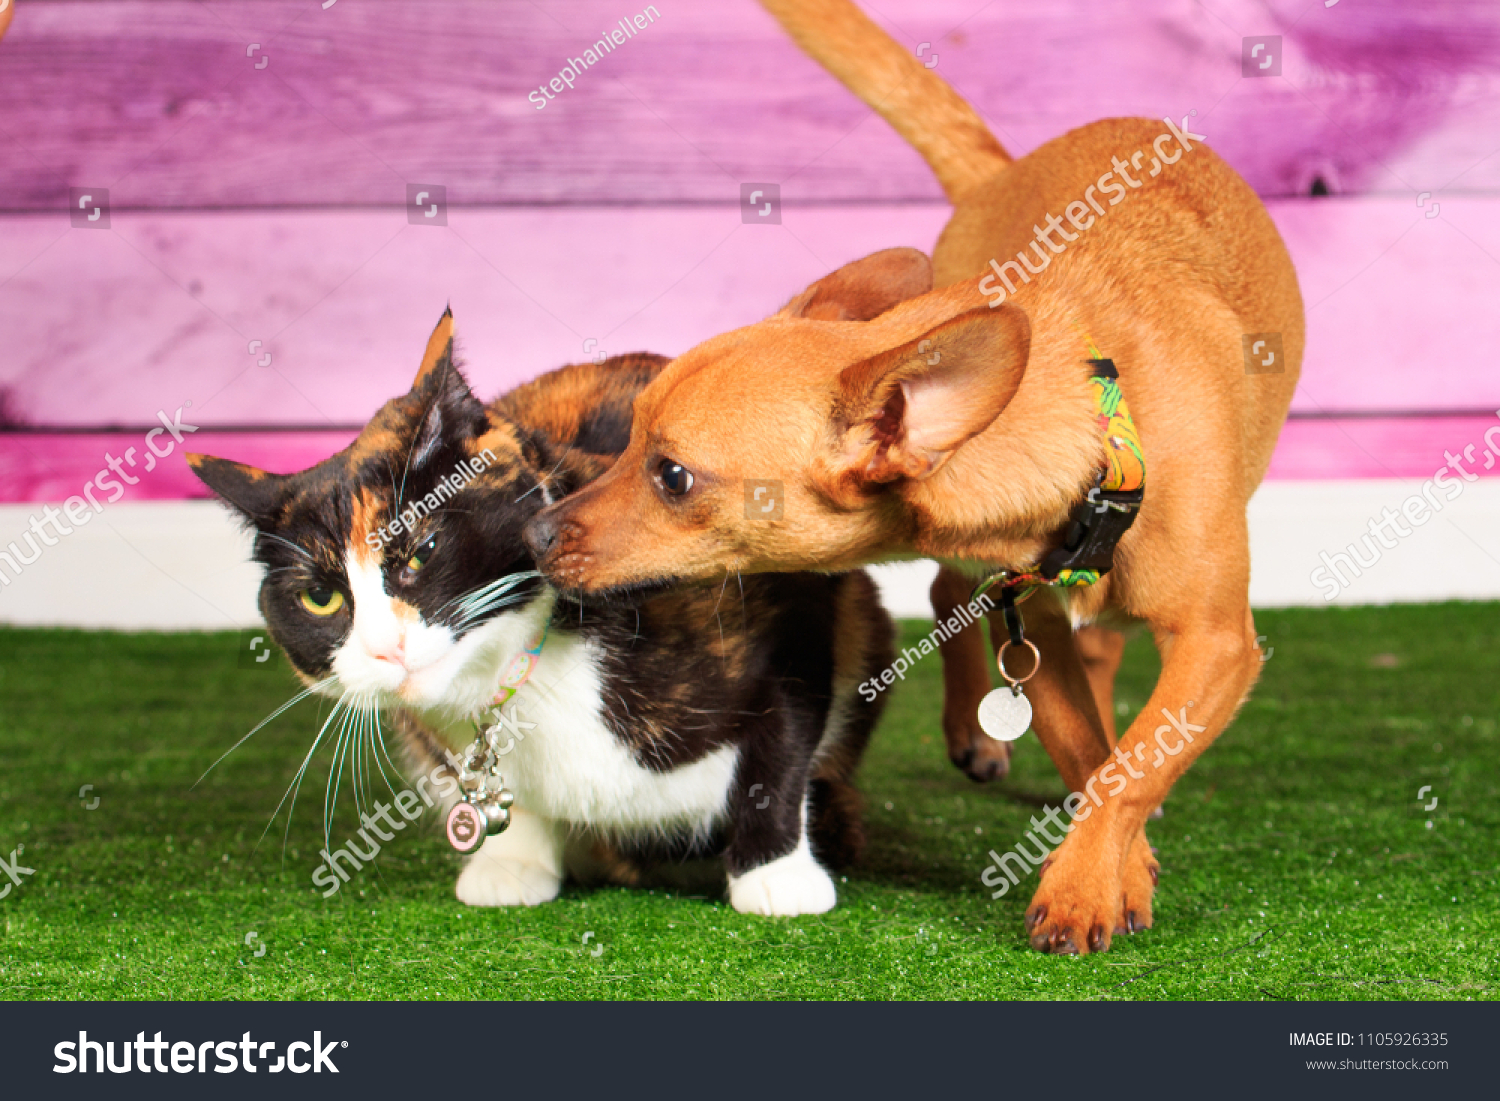 Dog kissing Cat #1105926335